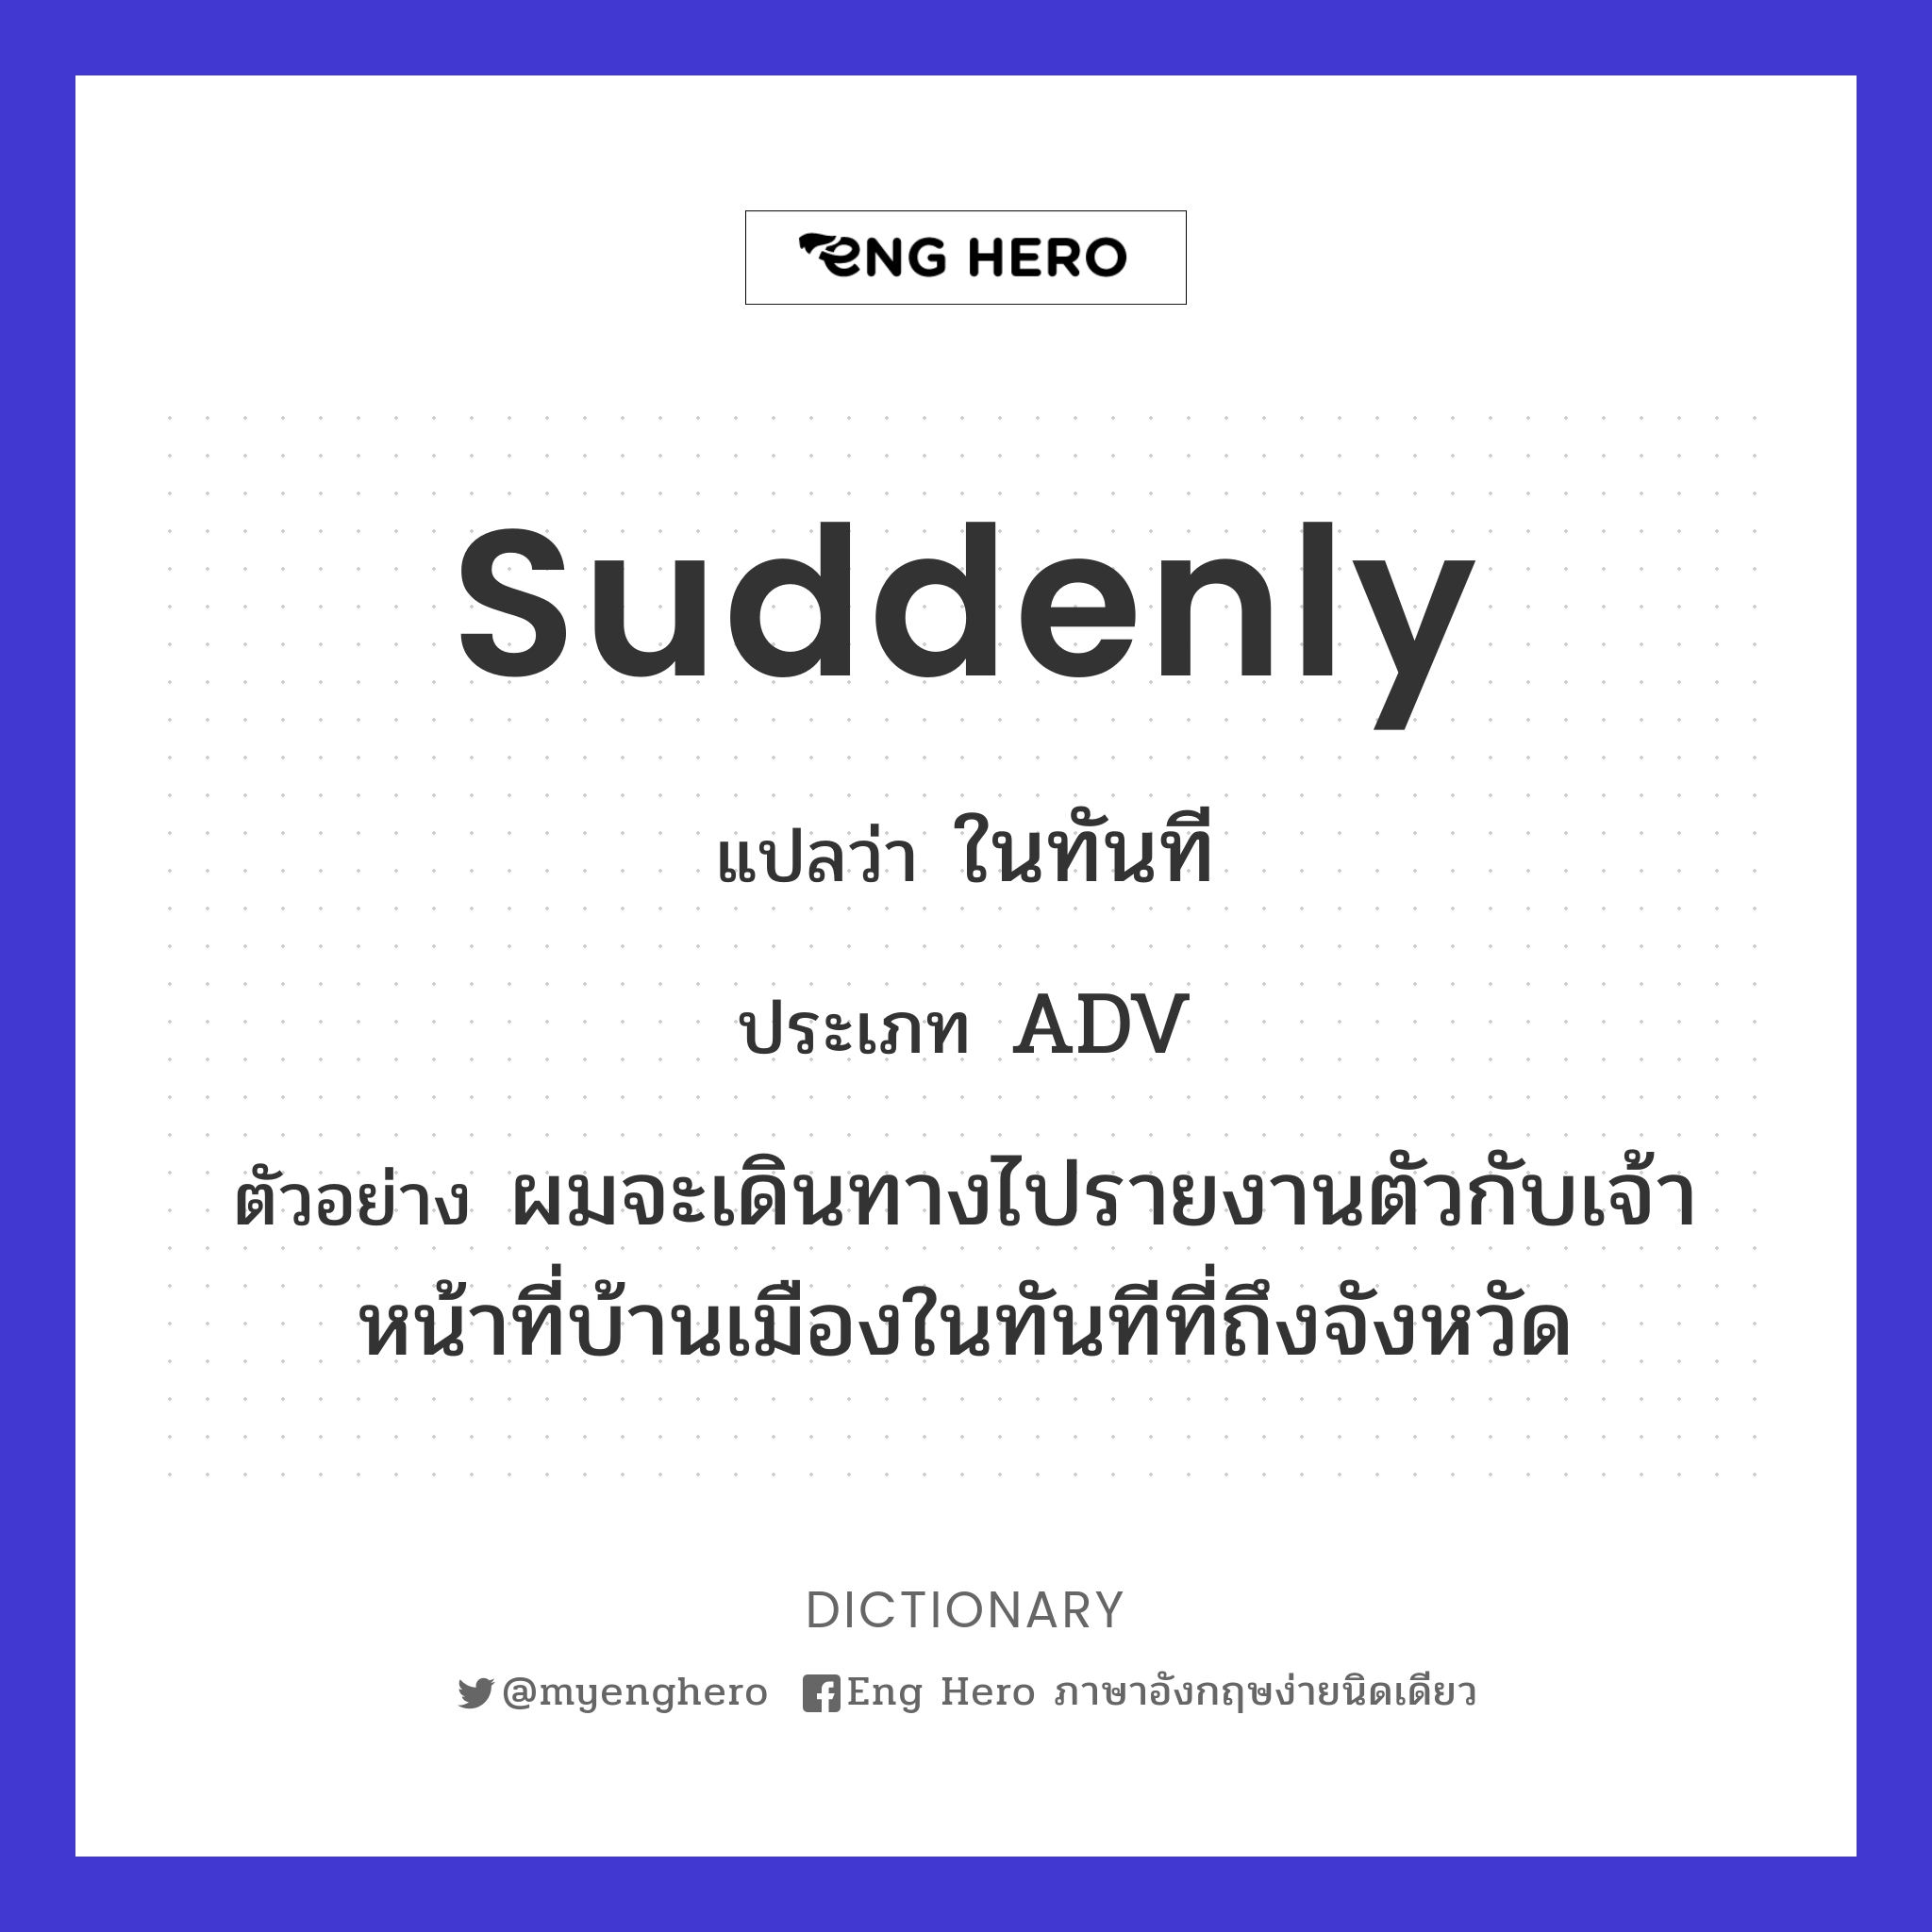 suddenly